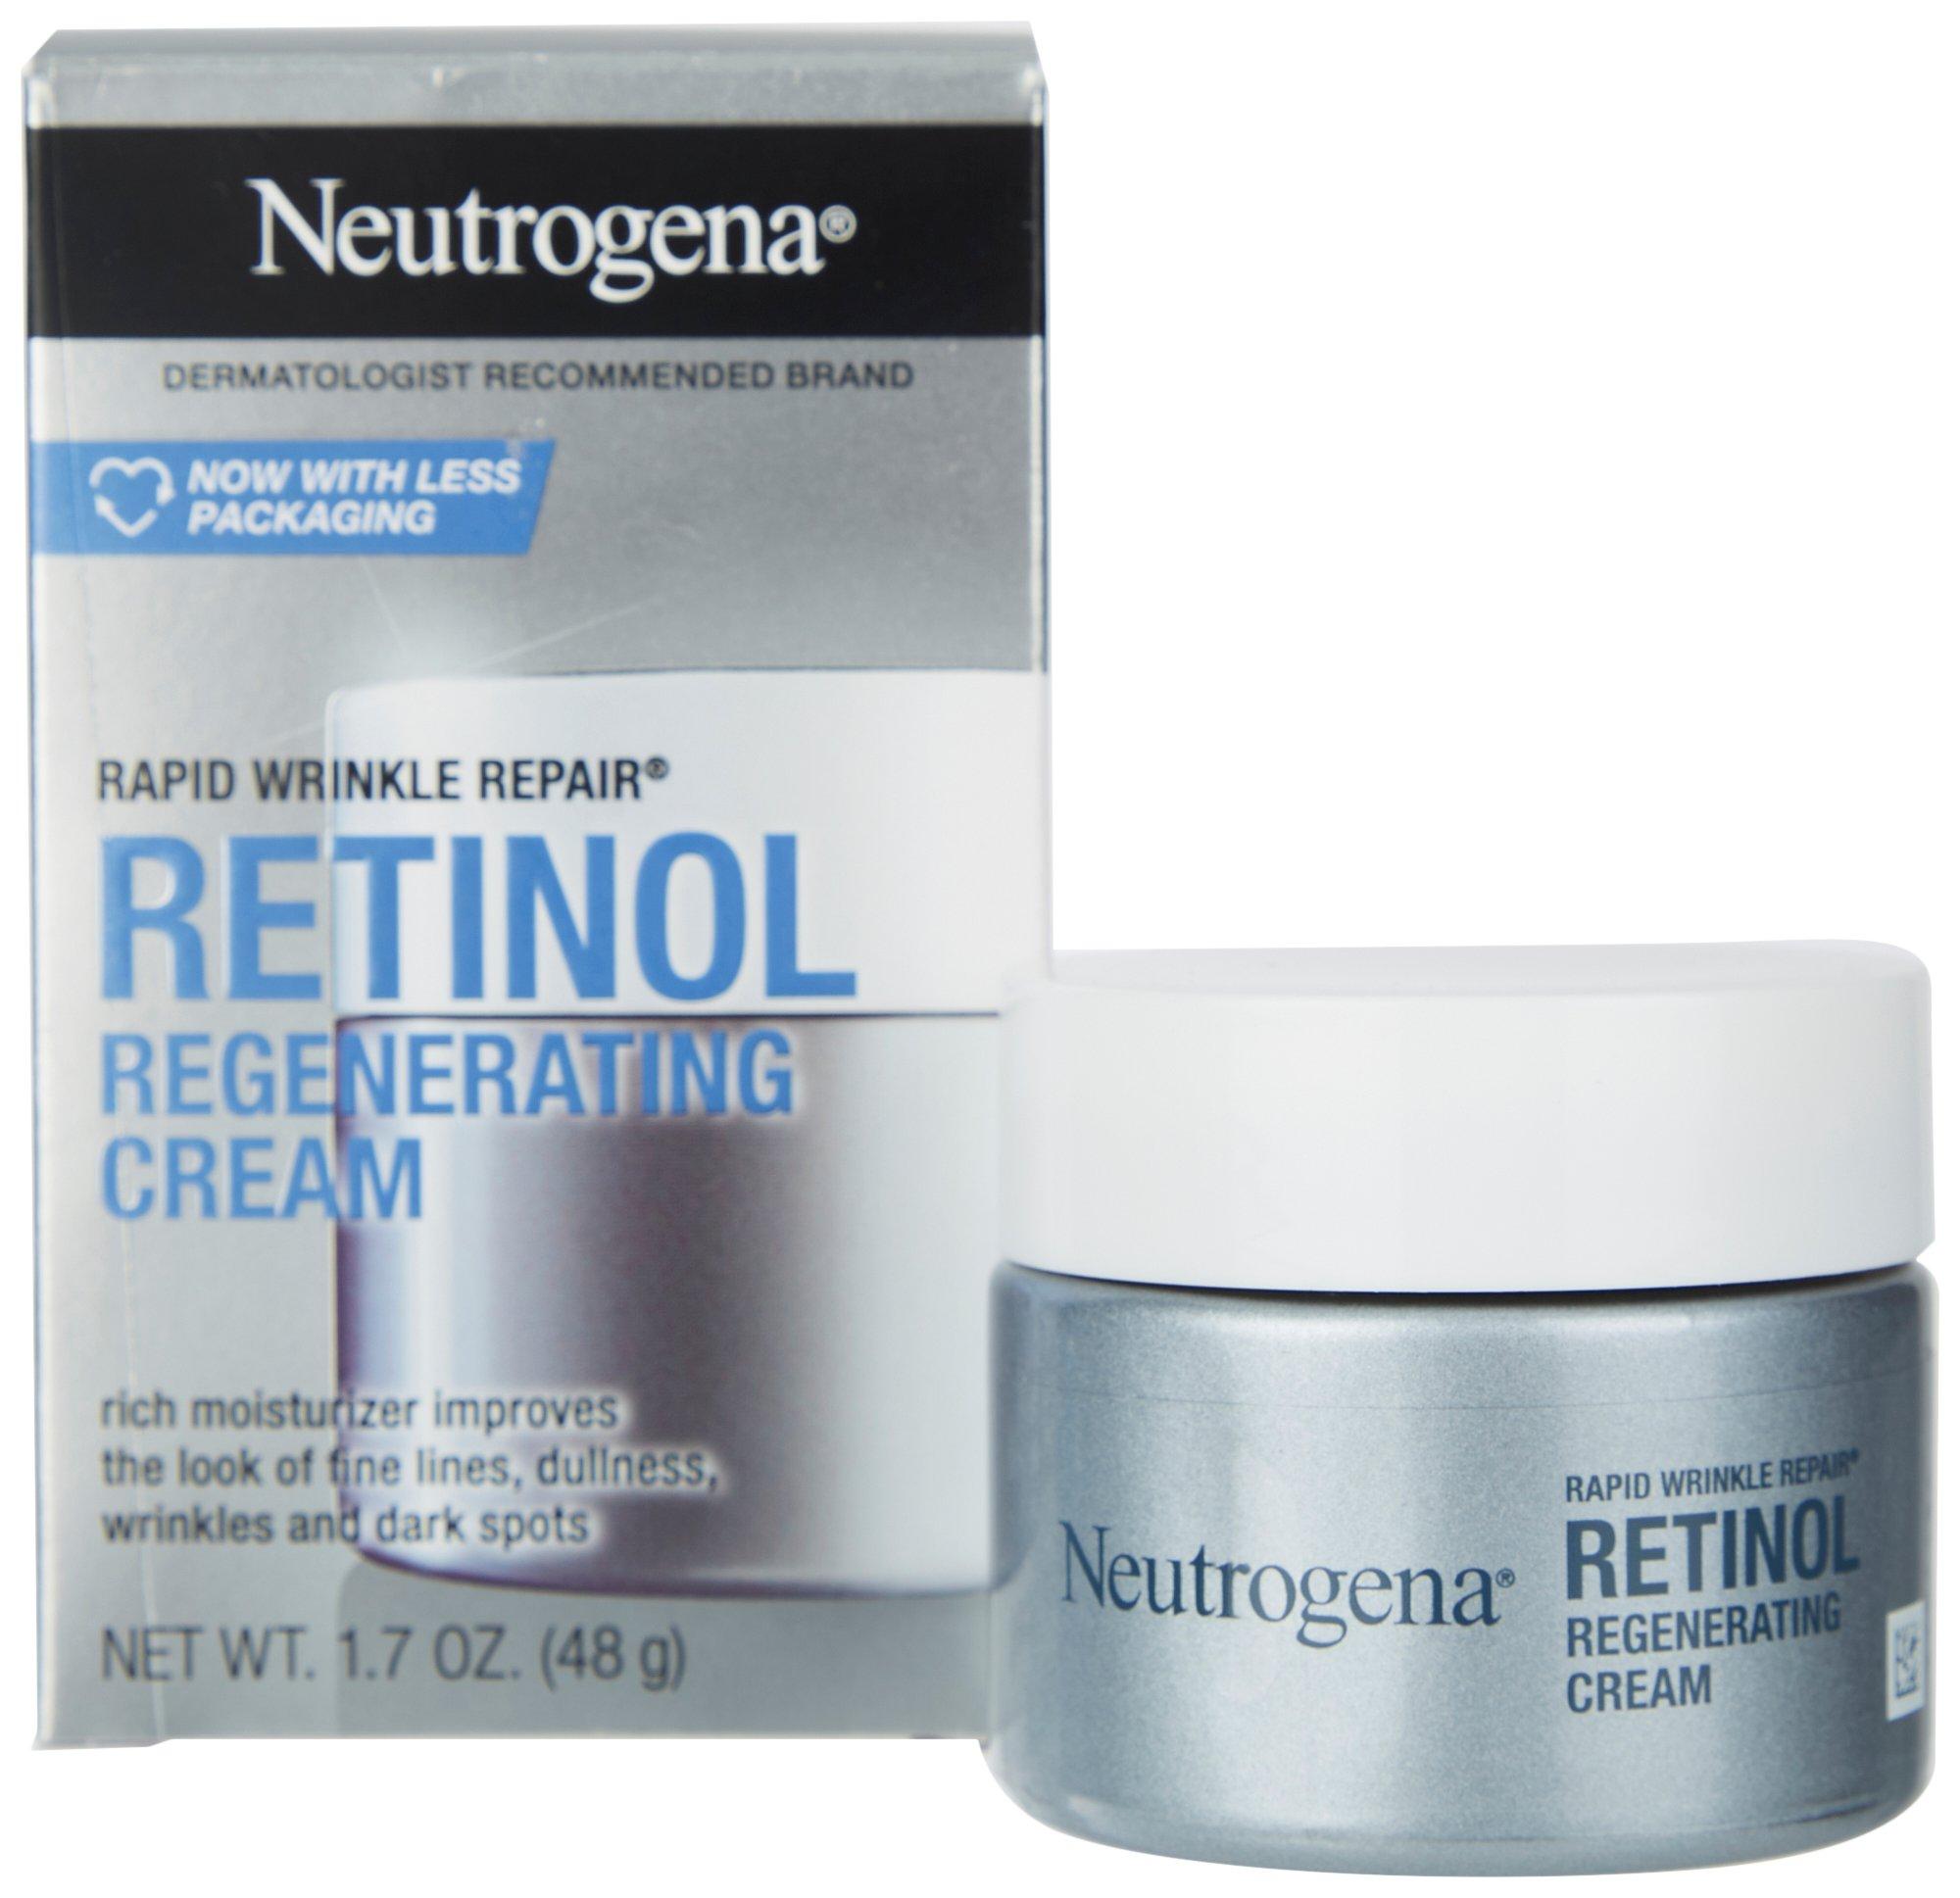 Rapid Wrinkle Repair Retinol Regenerating Cream